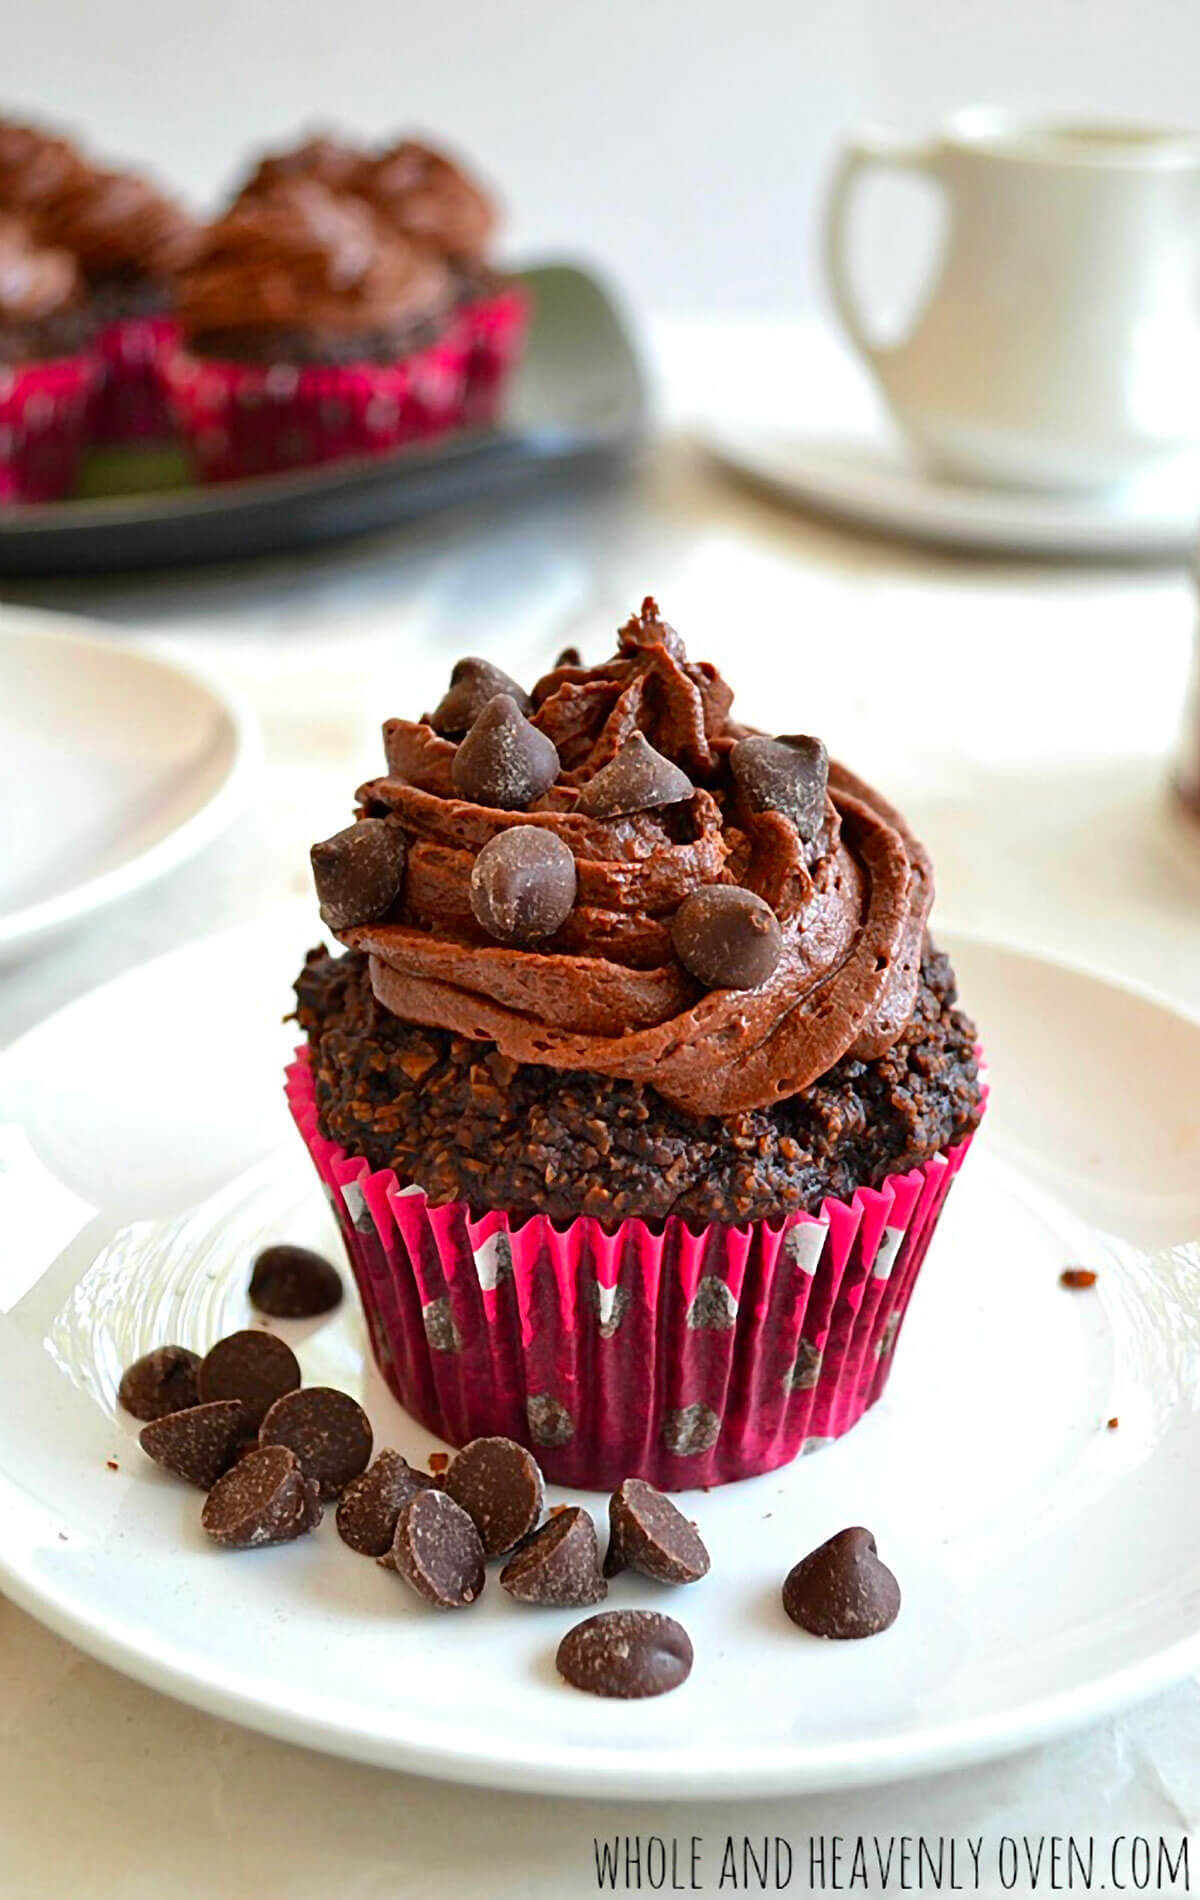 Gluten-Free Chocolate Cupcakes With Whipped Chocolate Ganache